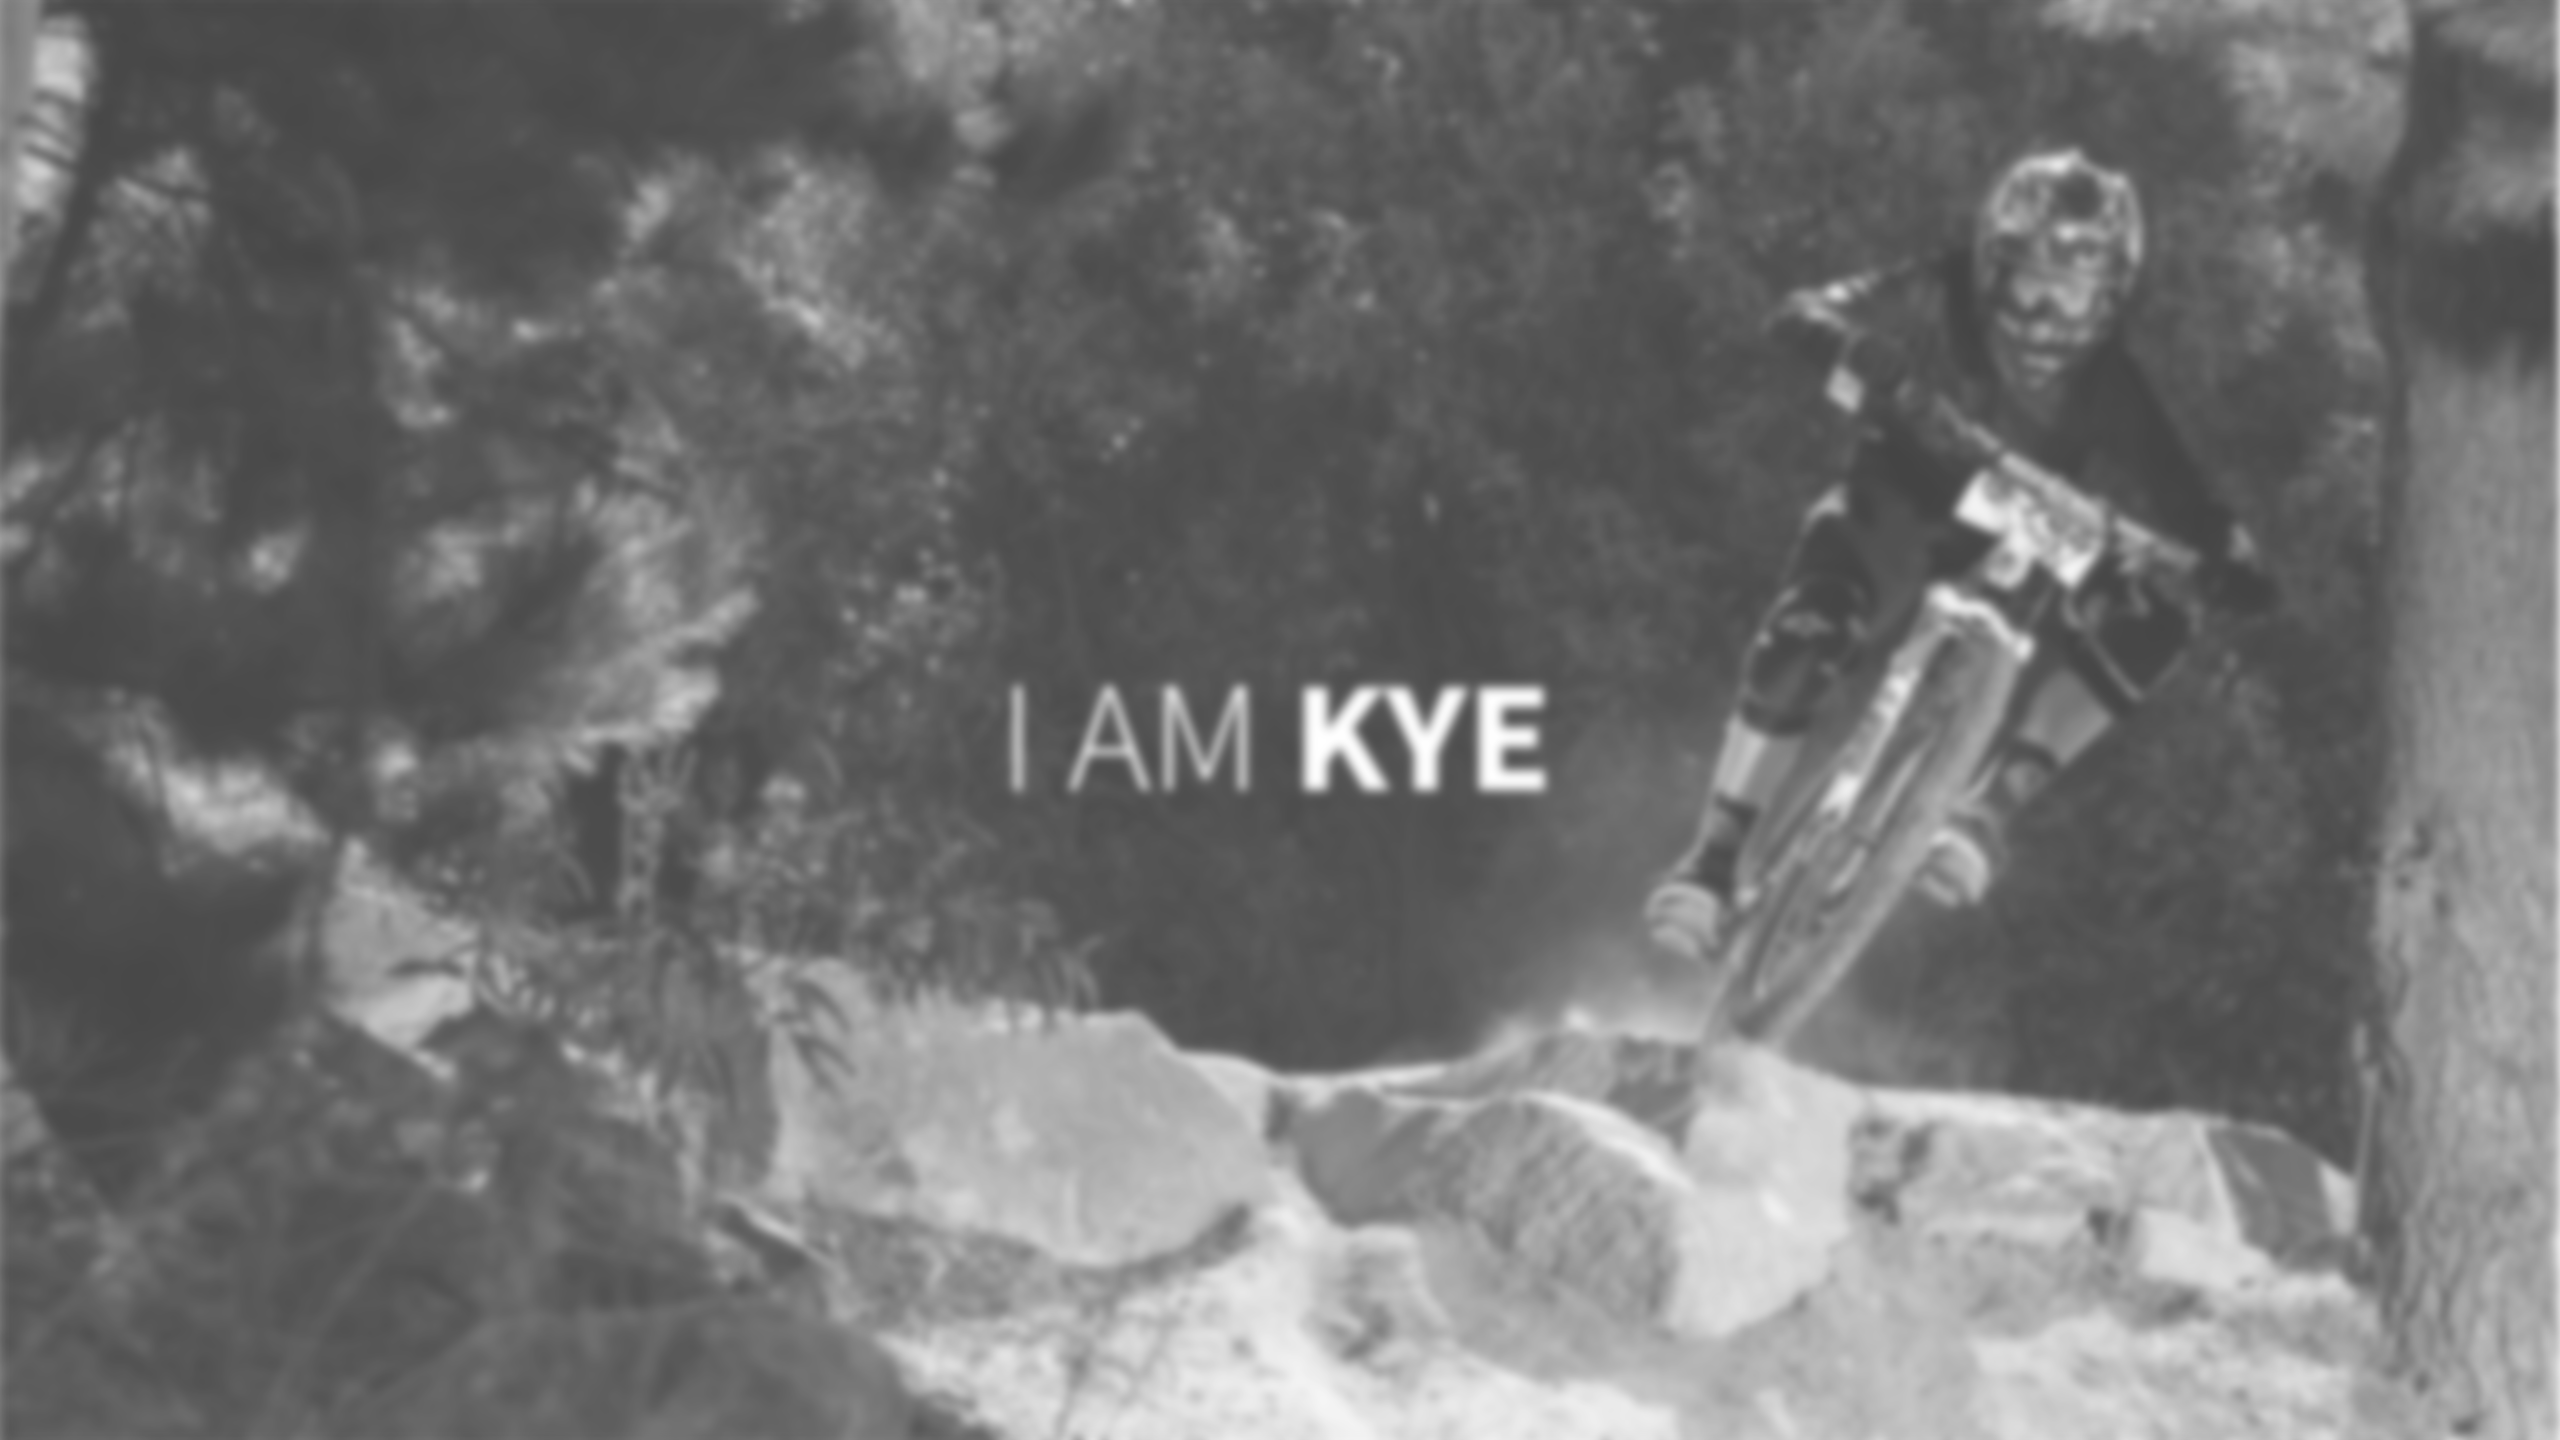 kye-background-b&w-blurred